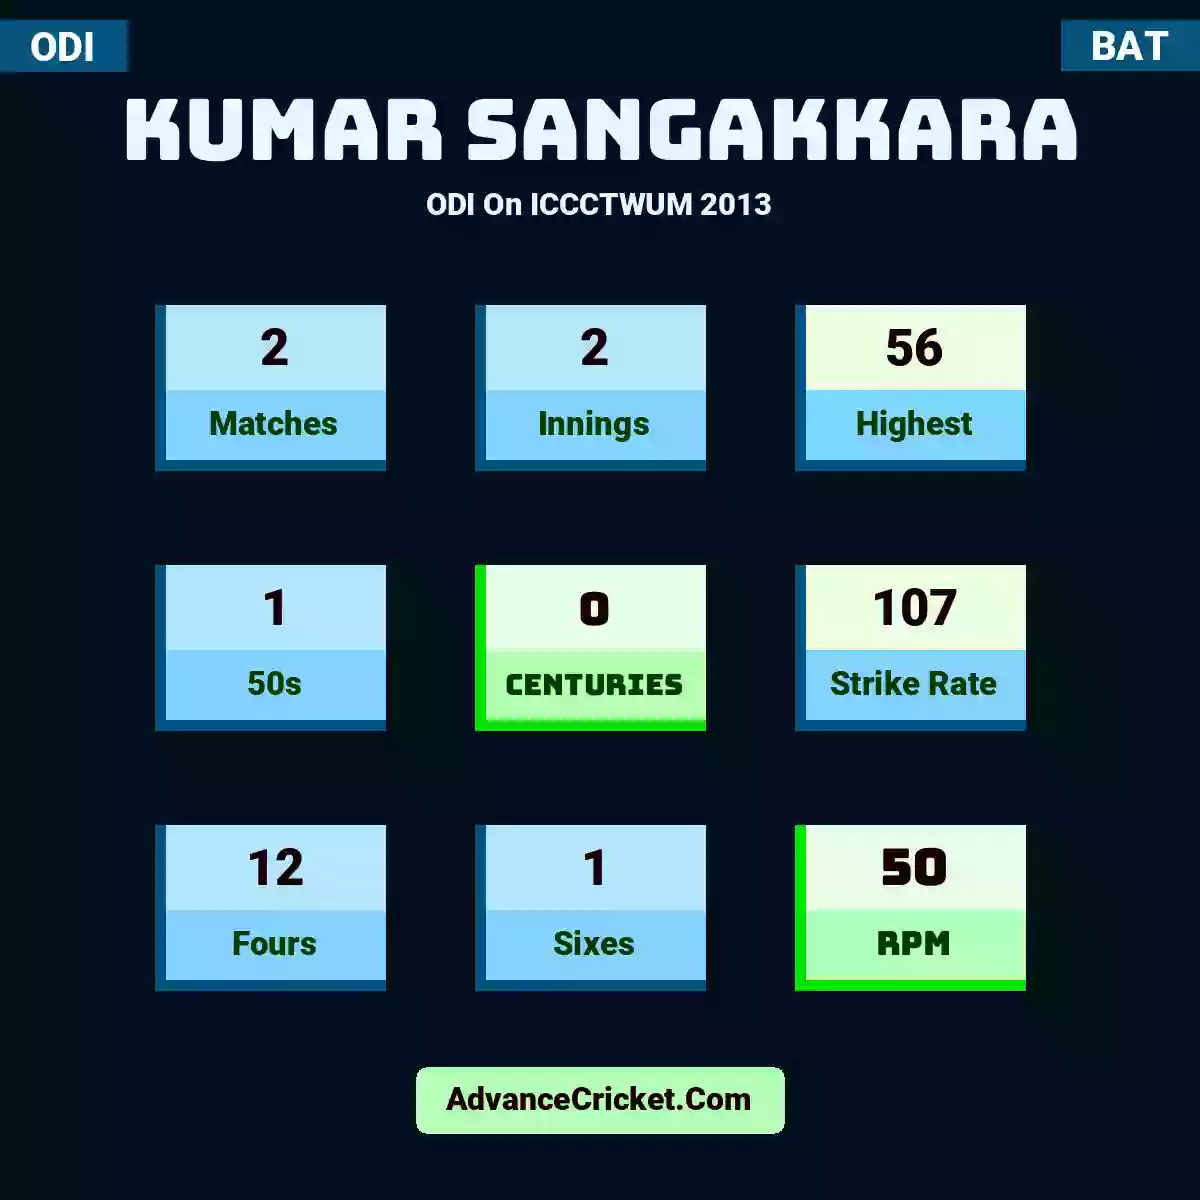 Kumar Sangakkara ODI  On ICCCTWUM 2013, Kumar Sangakkara played 2 matches, scored 56 runs as highest, 1 half-centuries, and 0 centuries, with a strike rate of 107. K.Sangakkara hit 12 fours and 1 sixes, with an RPM of 50.